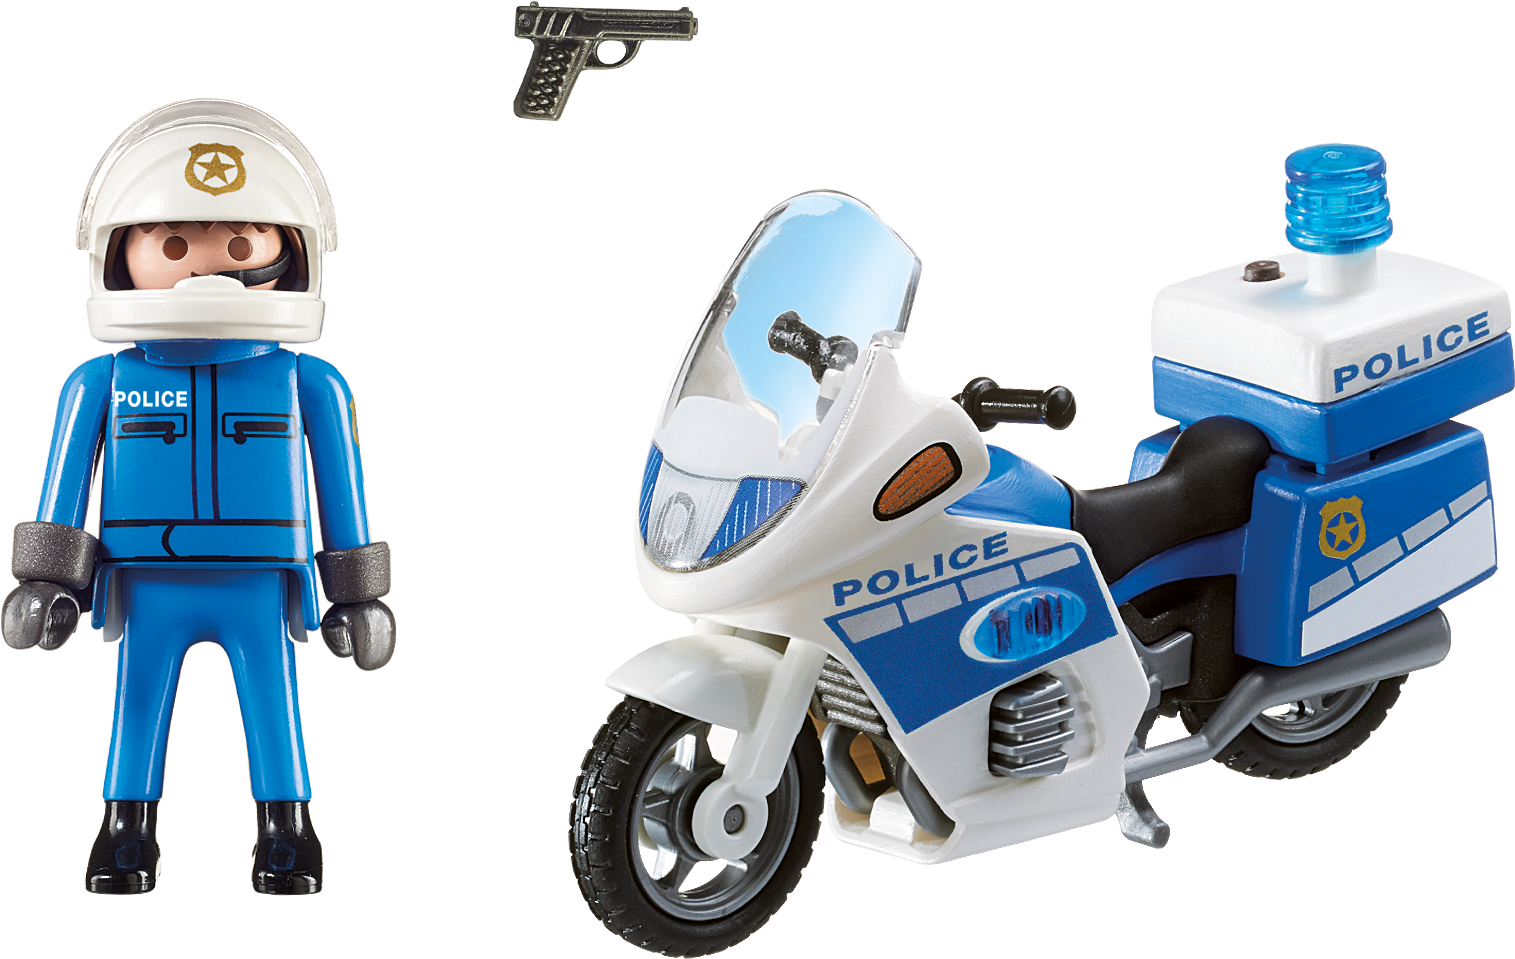 Police Bike With Led Light - Playmobil 6923 Police Bike With Led Light (2000x1400)